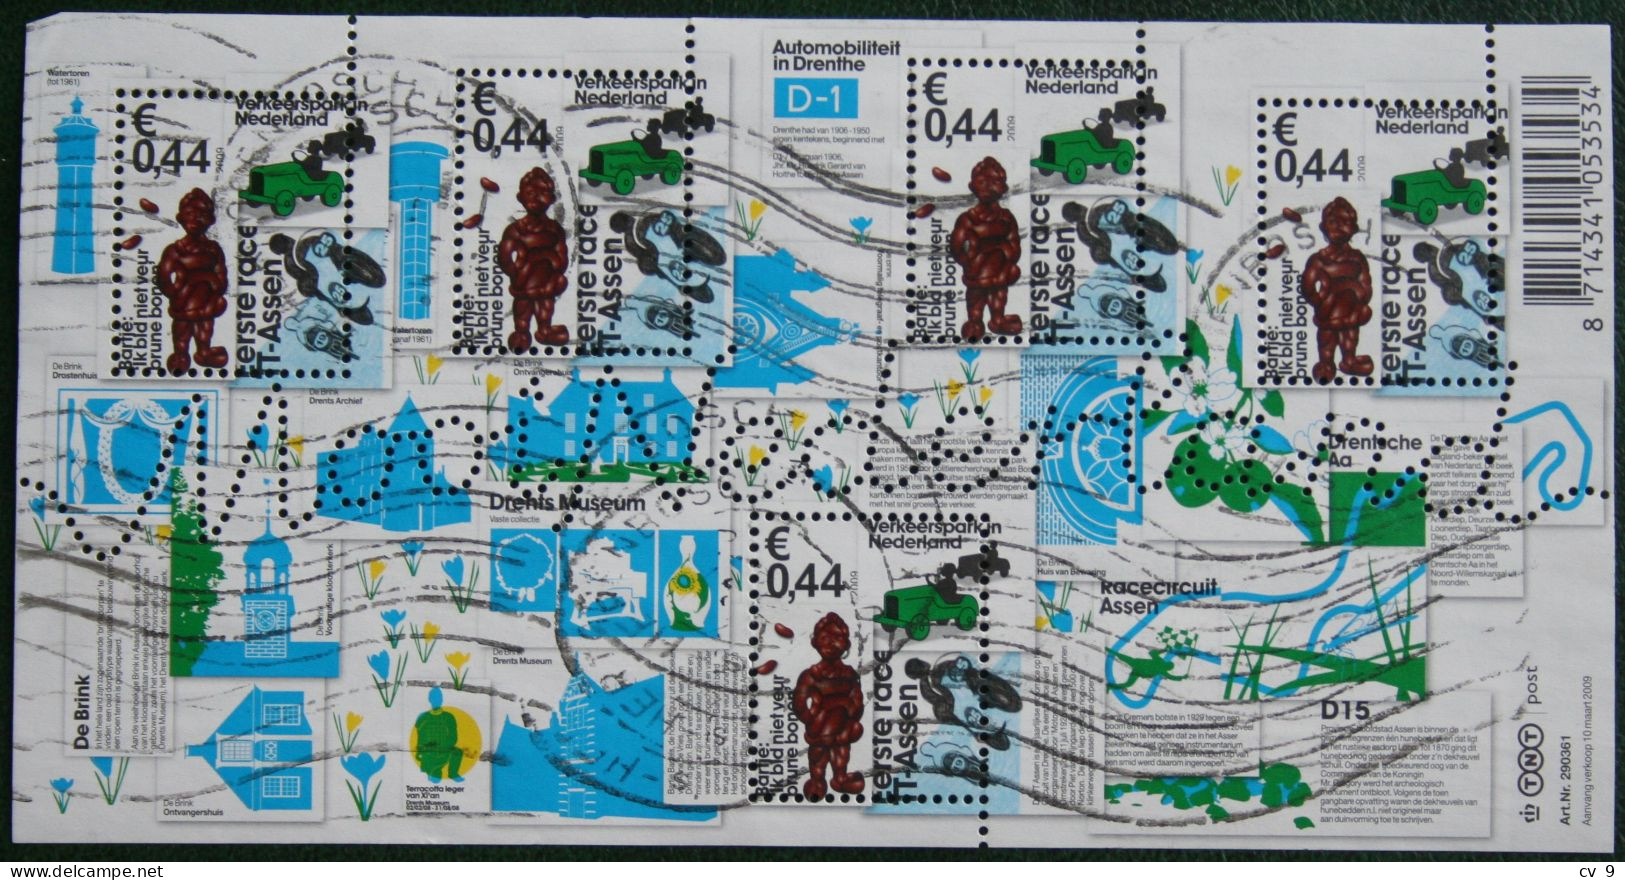 Blok Mooi Nederland Assen (36) NVPH 2637 (Mi 2650) 2009 Gestempeld / Used NEDERLAND/ NIEDERLANDE / NETHERLANDS - Used Stamps